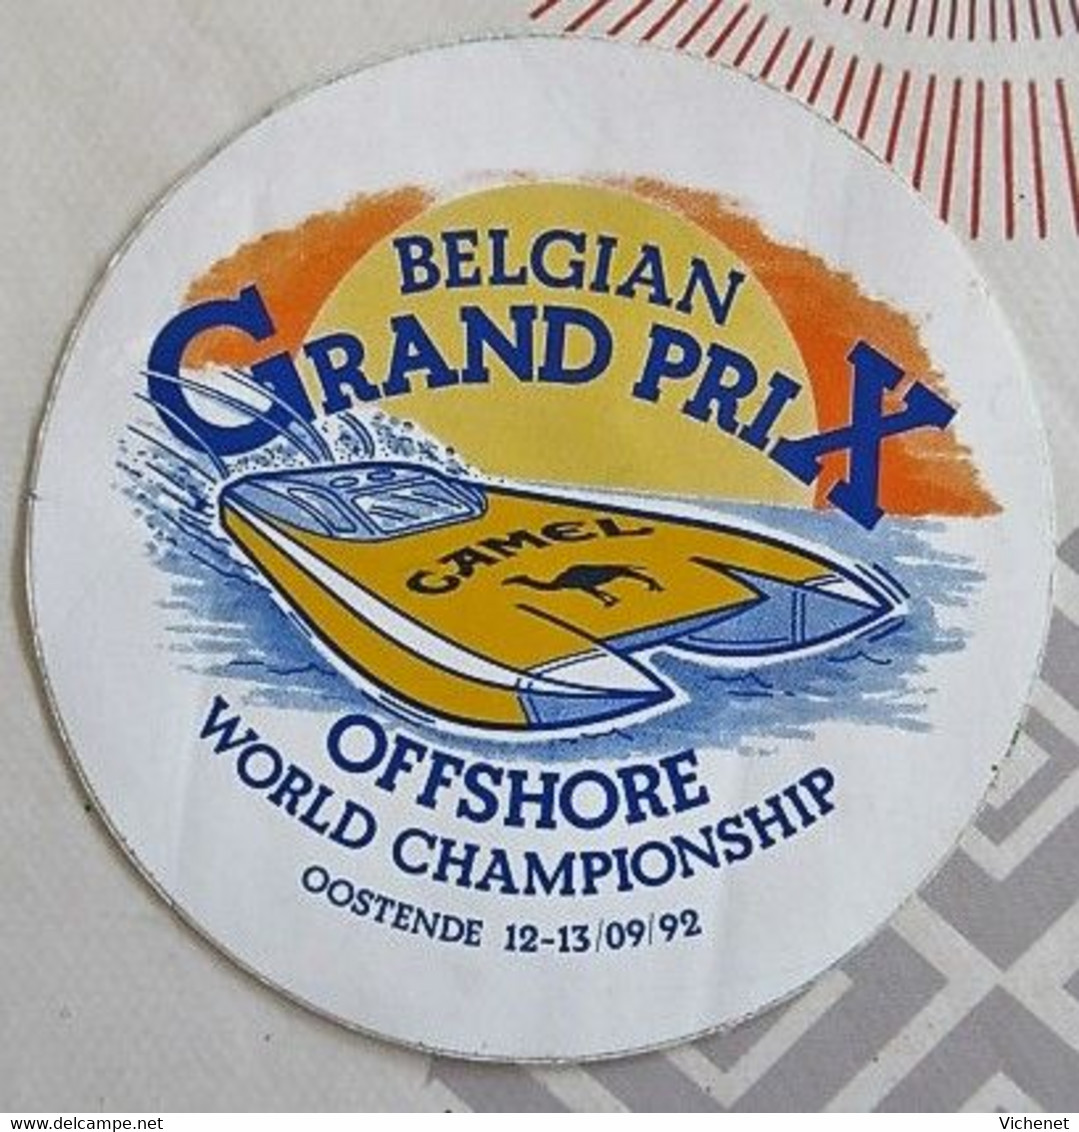 CAMEL - Belgium Grand Prix - Offshore World Championship - Oostende 12-13 / 09 / 92 - Objetos Publicitarios